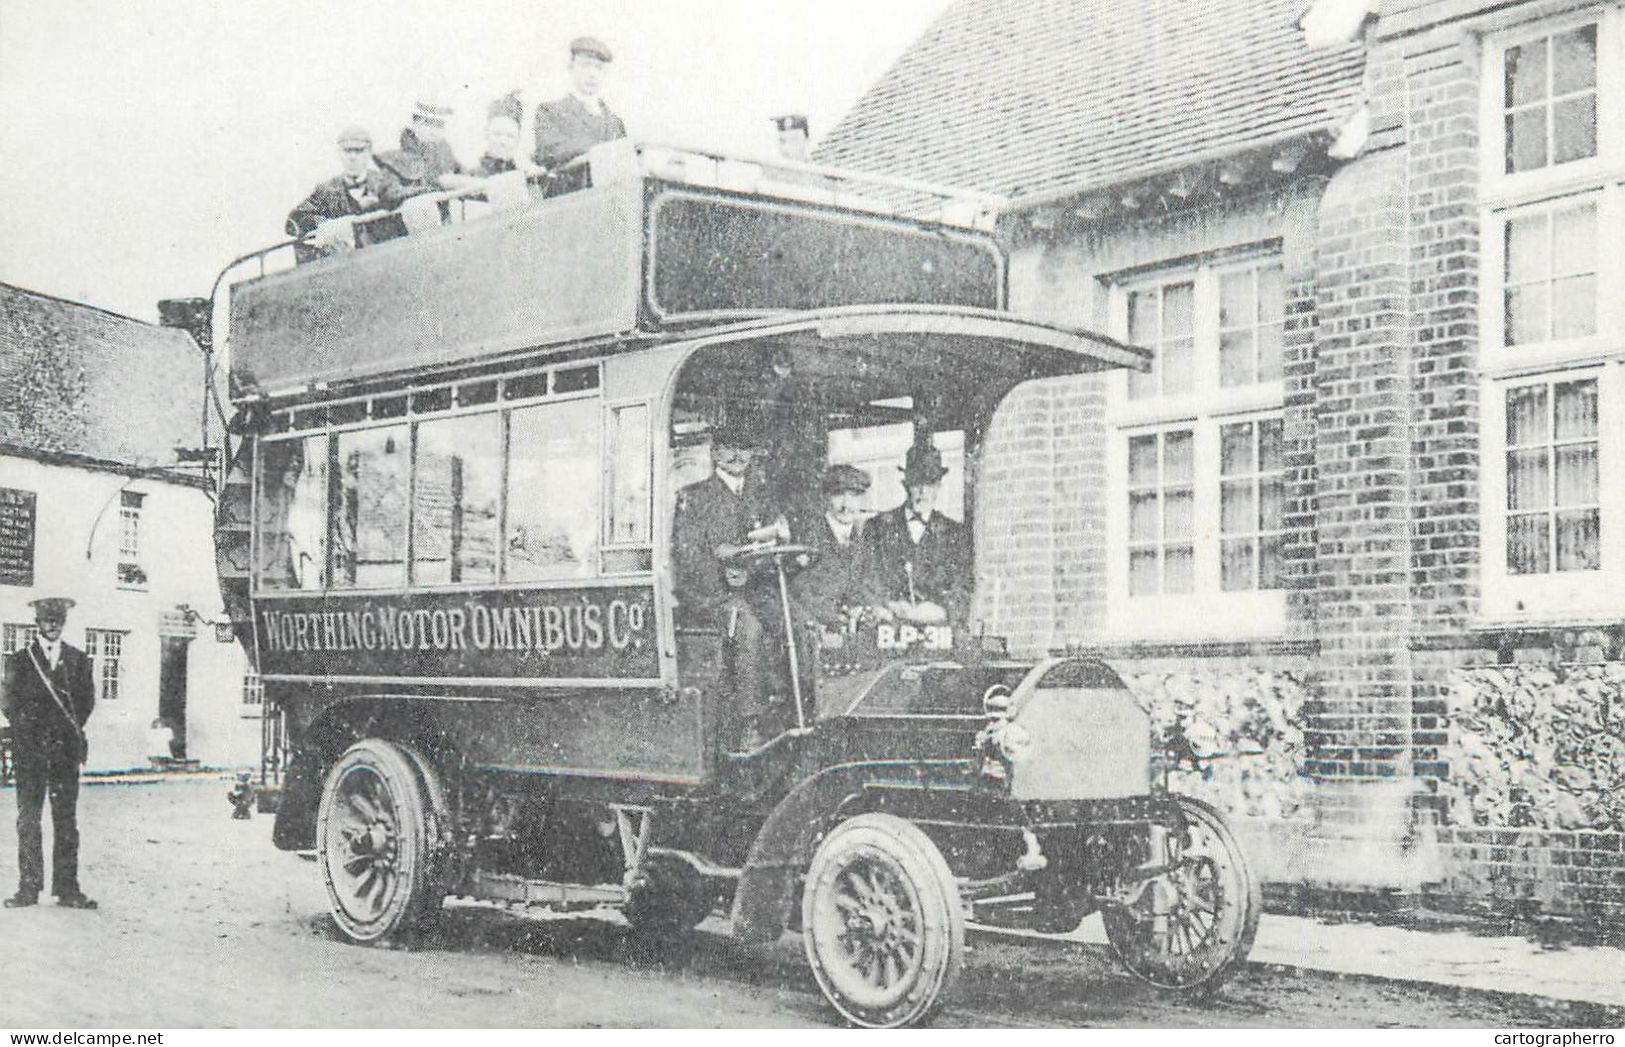 History Nostalgia Repro Postcard Bus And Parish Reading Room Tarring 1905 - Histoire